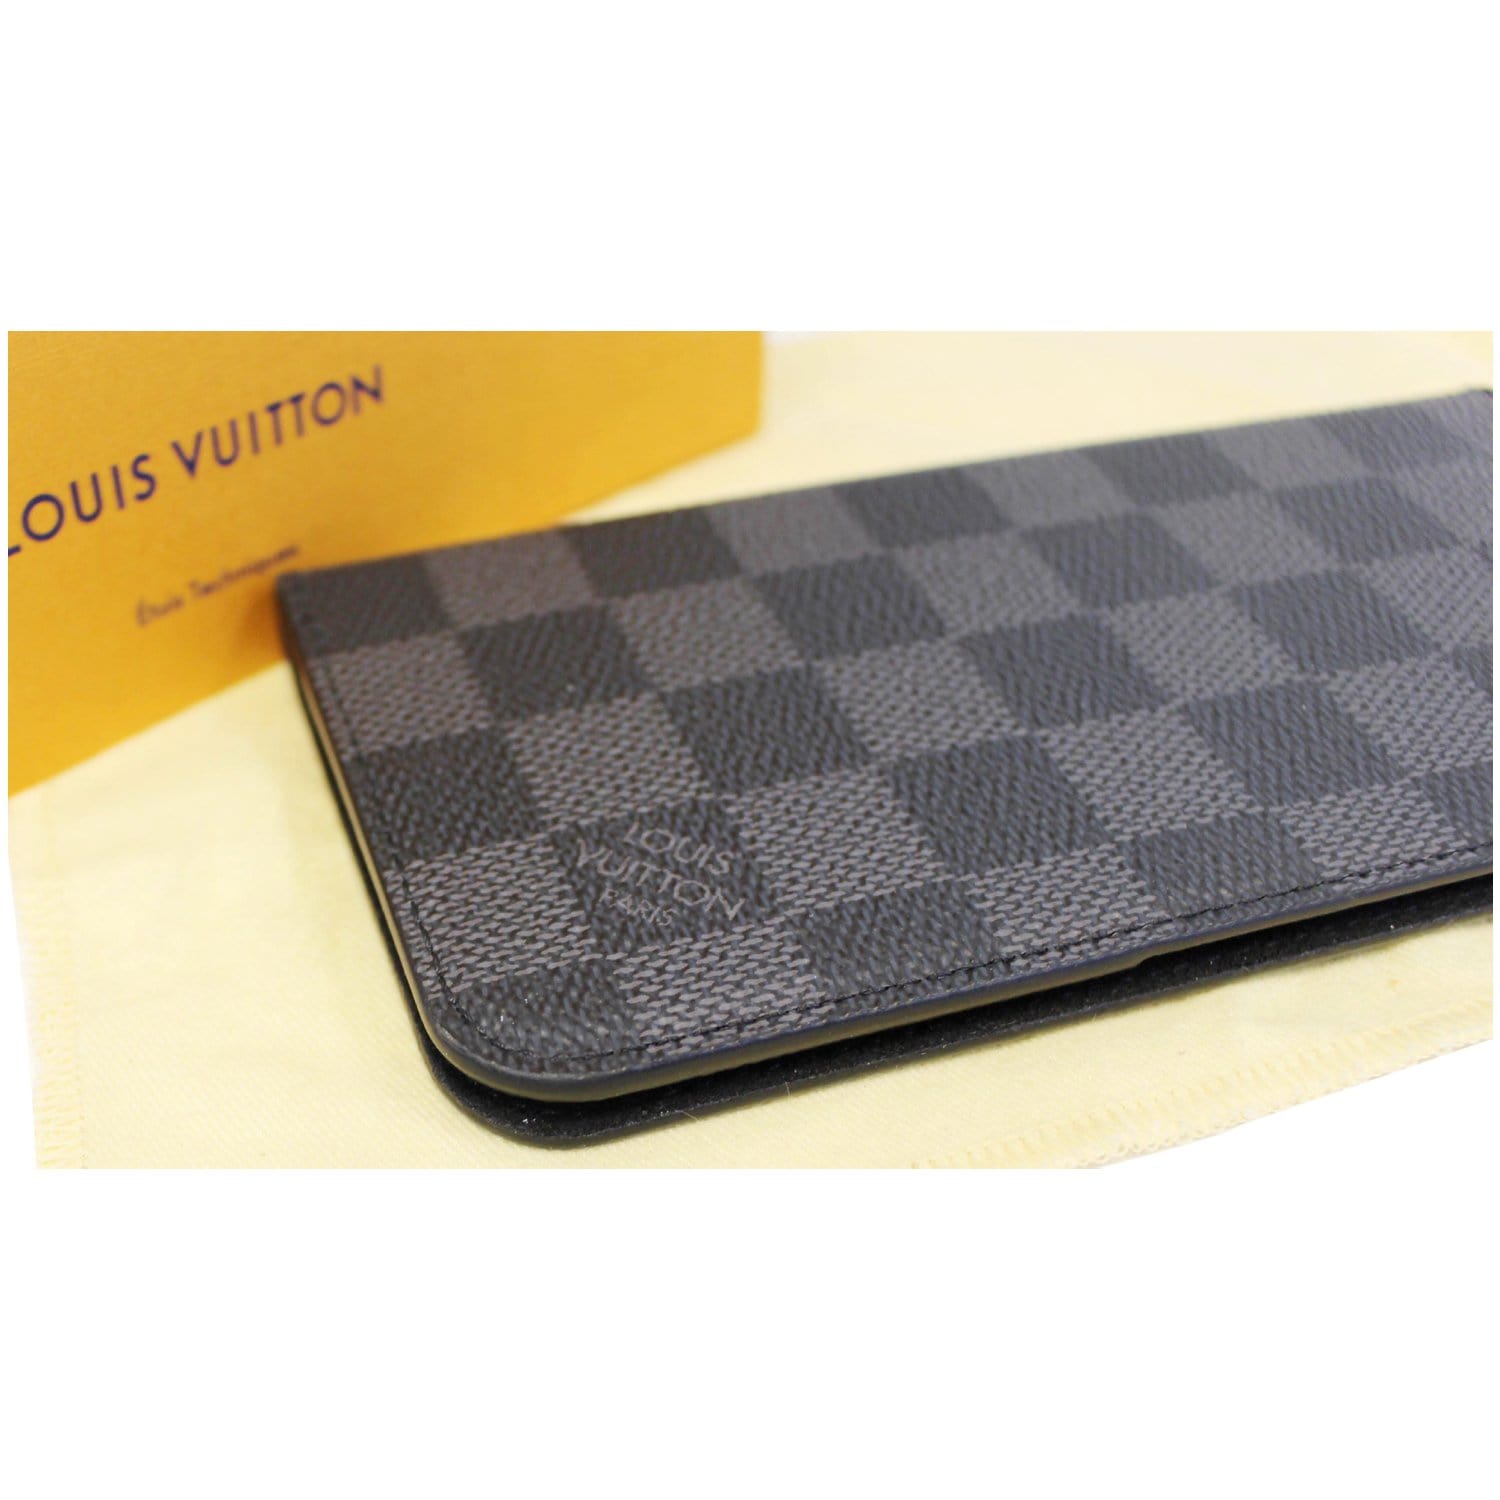 lv black grid wallet